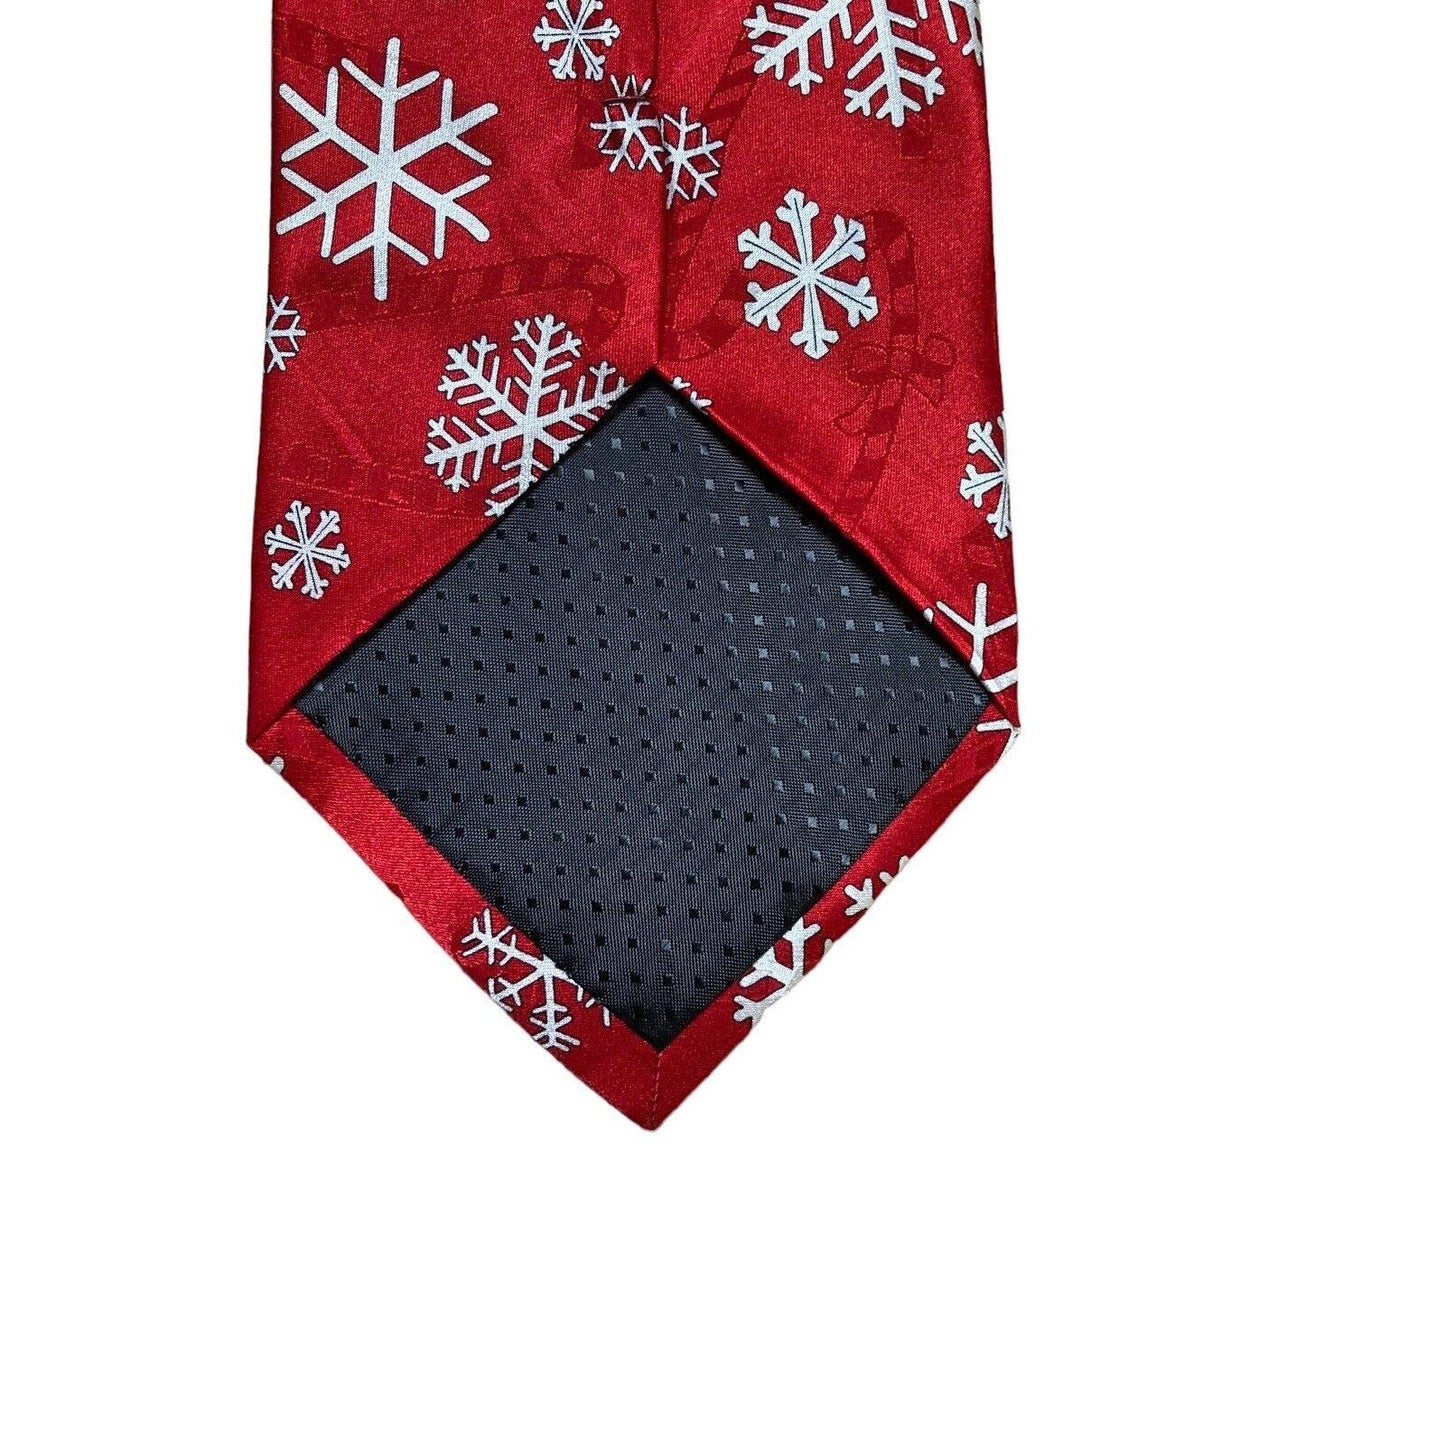 Hallmark Special Ties Snowflakes Snow Holiday Christmas Novelty Vintage Necktie